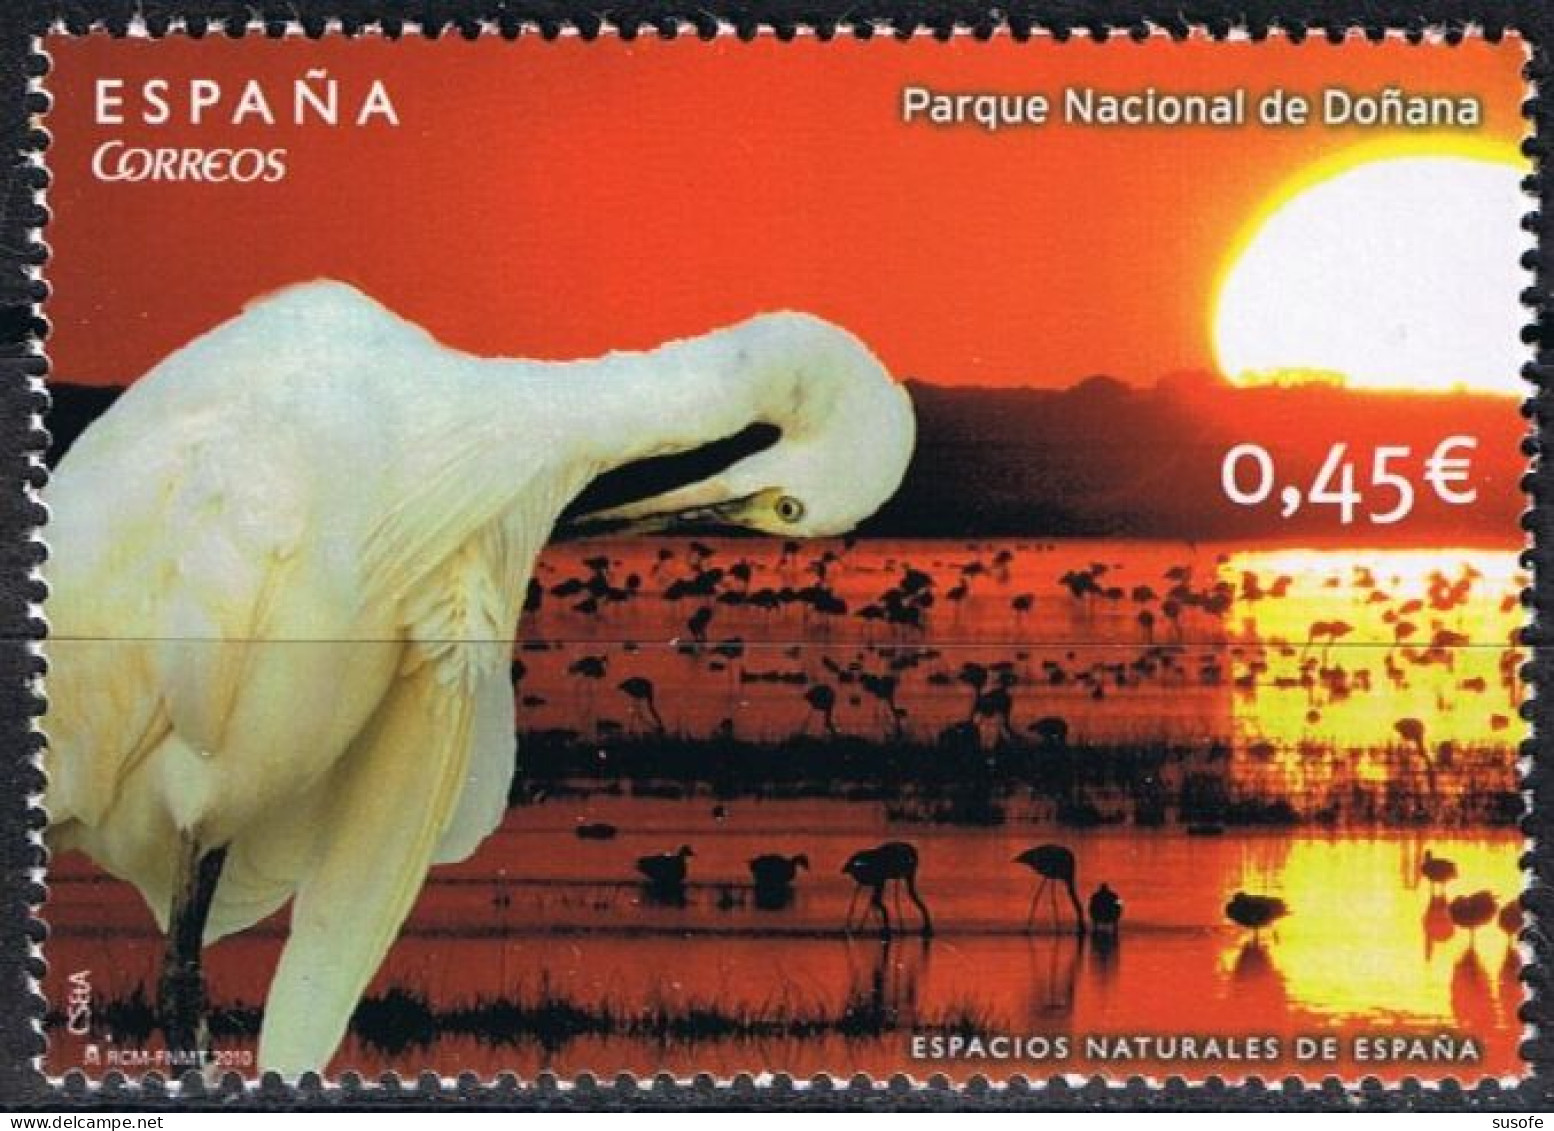 España 2010 Edifil 4568 Sello ** Espacios Naturales Parque Nacional De Doñana Huelva Garza (Ardea Alba) Patrimonio Mundi - Unused Stamps